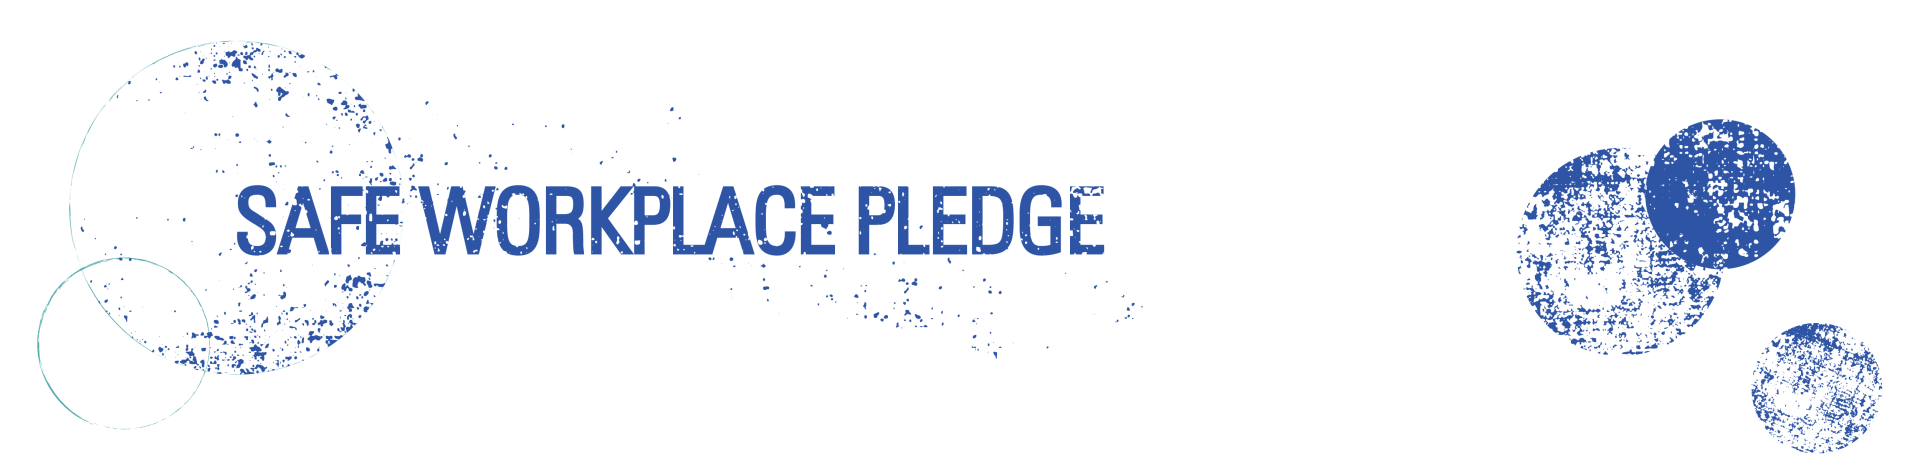 Eco-citizenship pledge